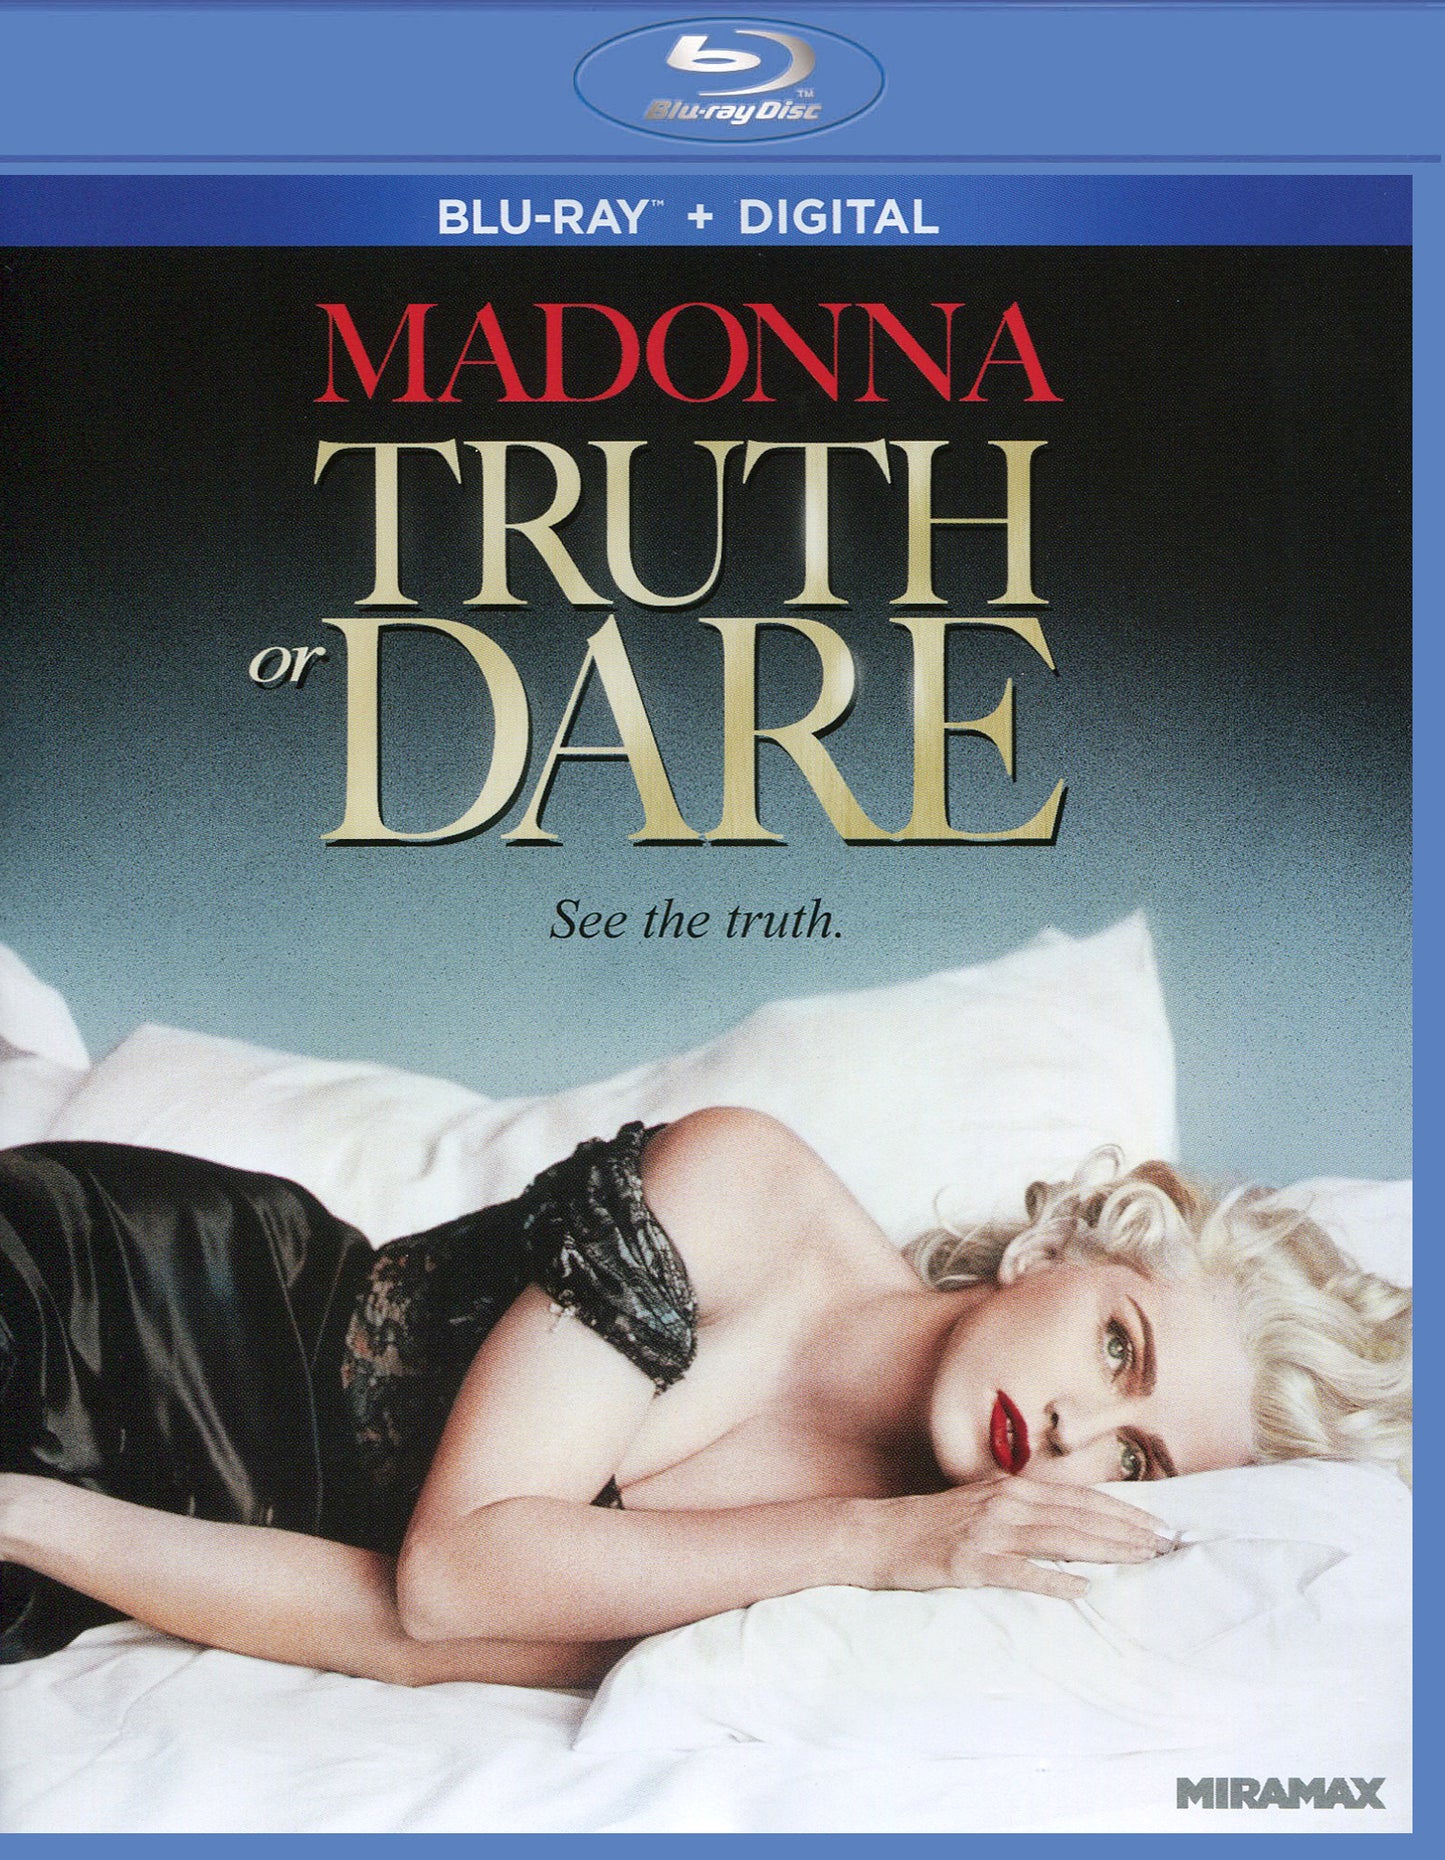 Madonna: Truth or Dare [Blu-ray] cover art